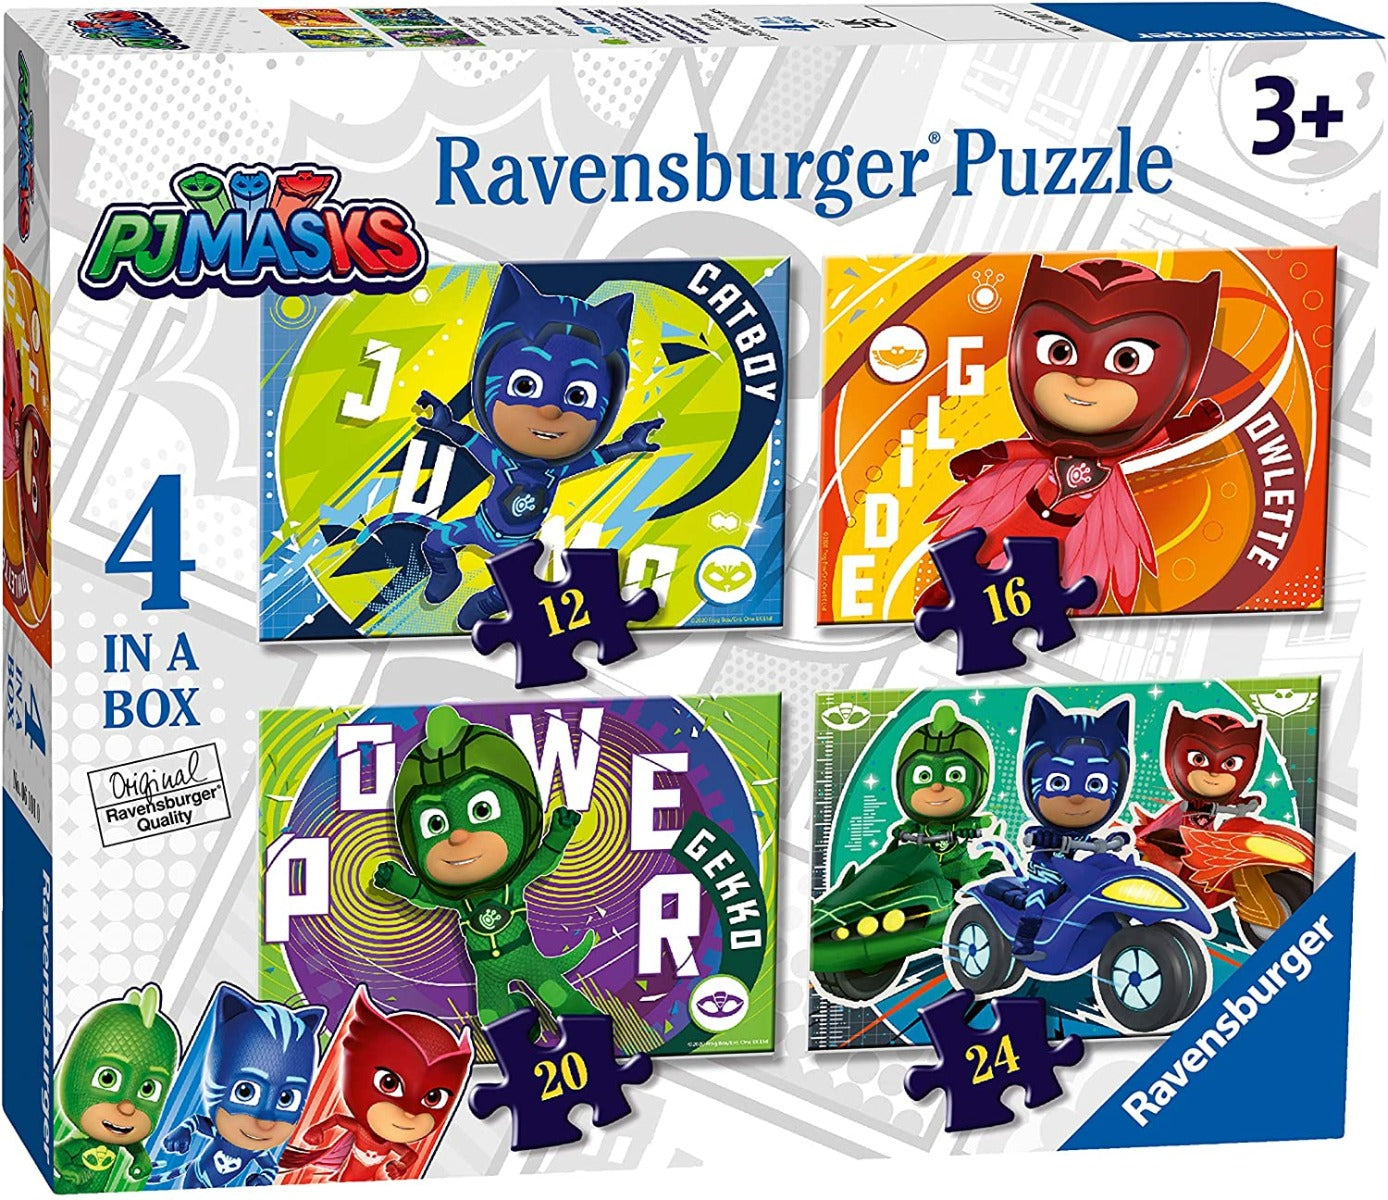 Ravensburger 5058 PJ Masks 4 In Box (12, 16, 20, 24 Piece) Jigsaw Puzzles